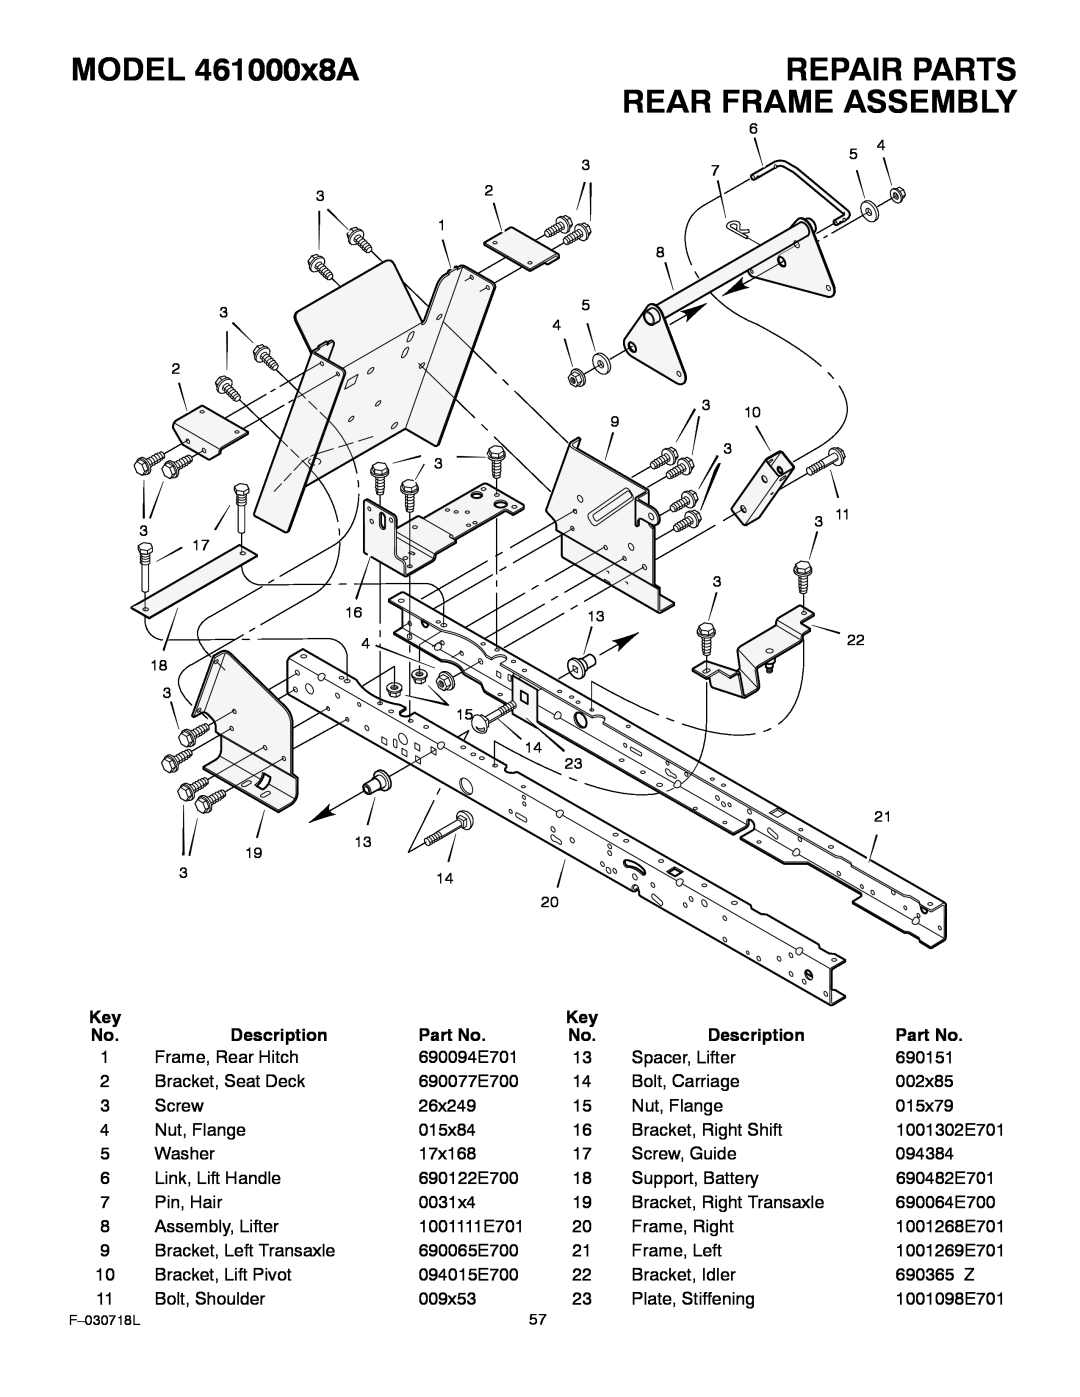 Murray manual Repair Parts Rear Frame Assembly, MODEL 461000x8A, Description 